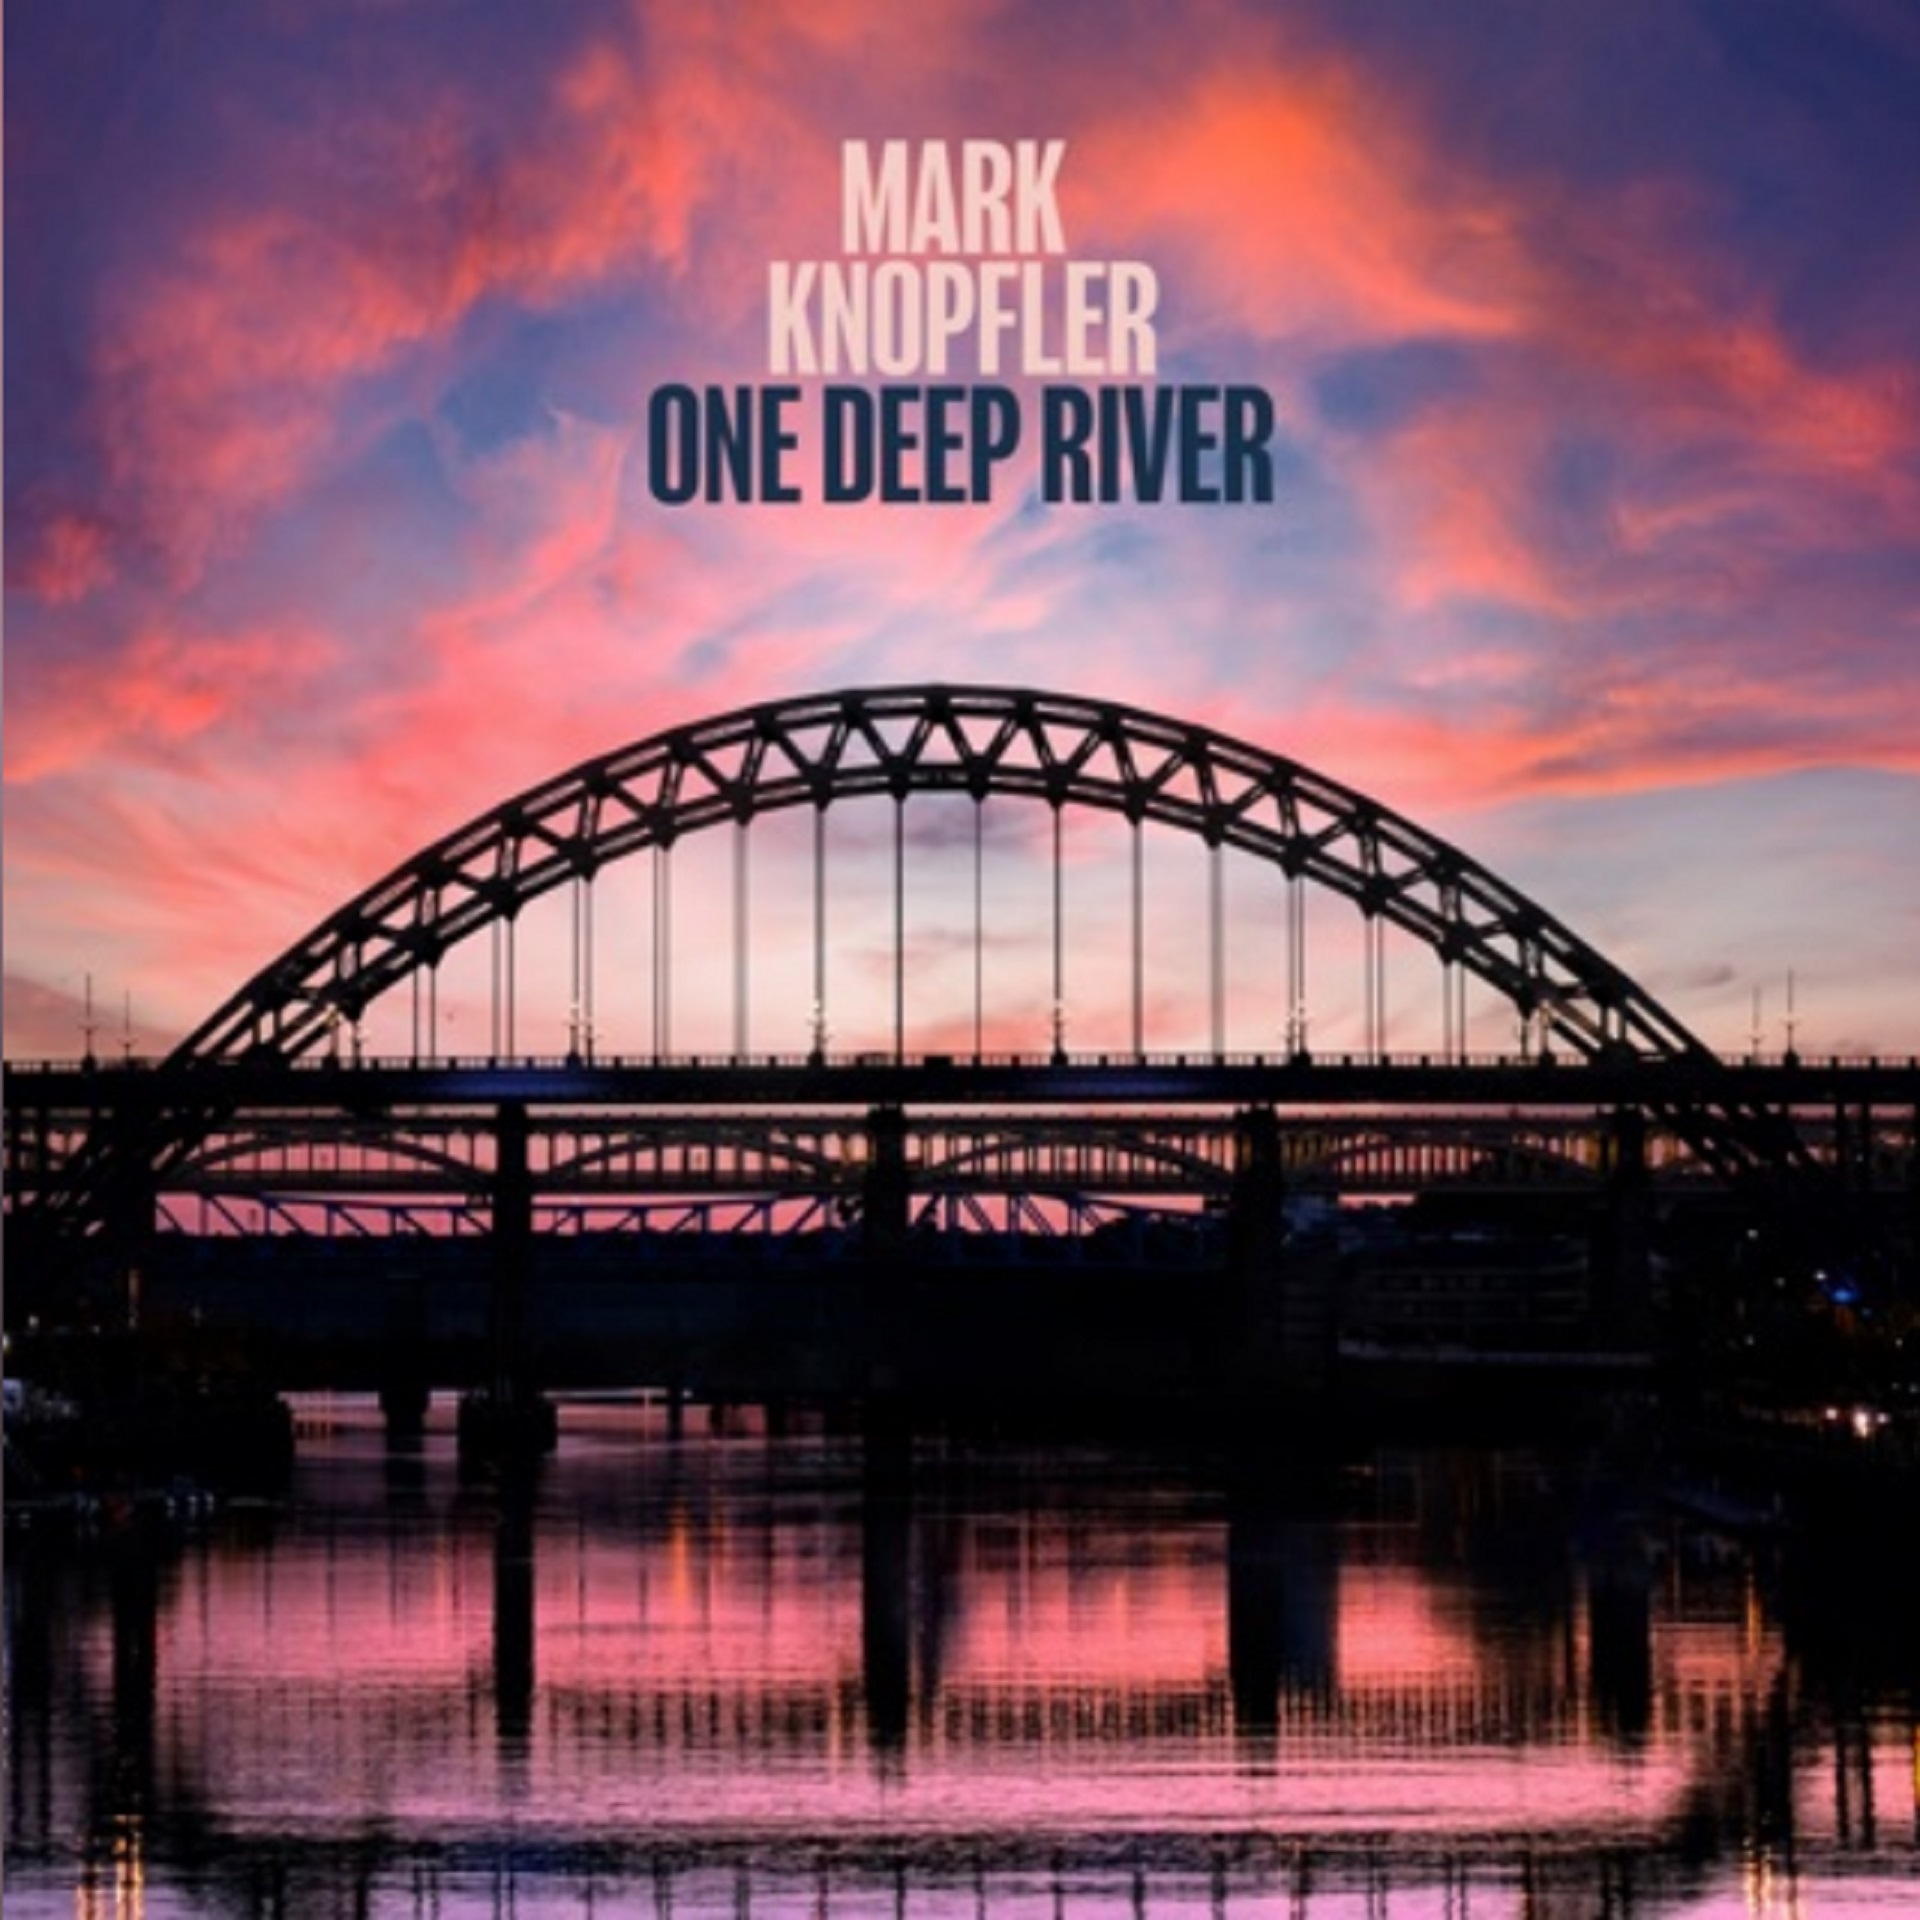 Mark Knopfler’s new album One Deep River set for release April 12